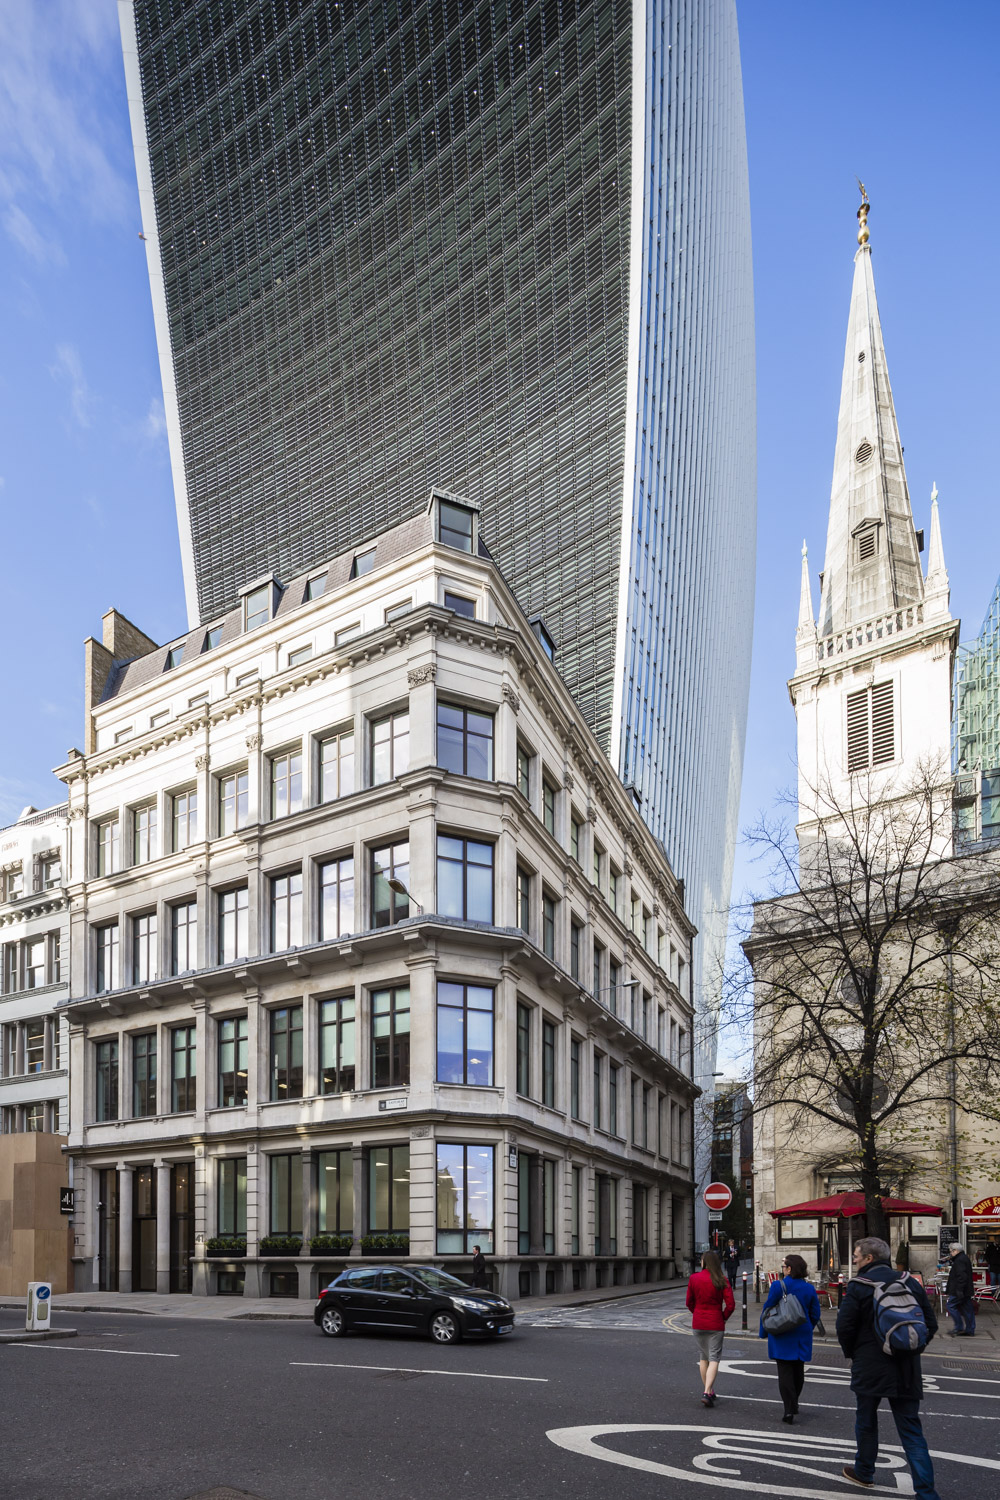 41 Eastcheap Street office designed by Ben Adams Architects next to the 'Walkietalkie', London, UK.